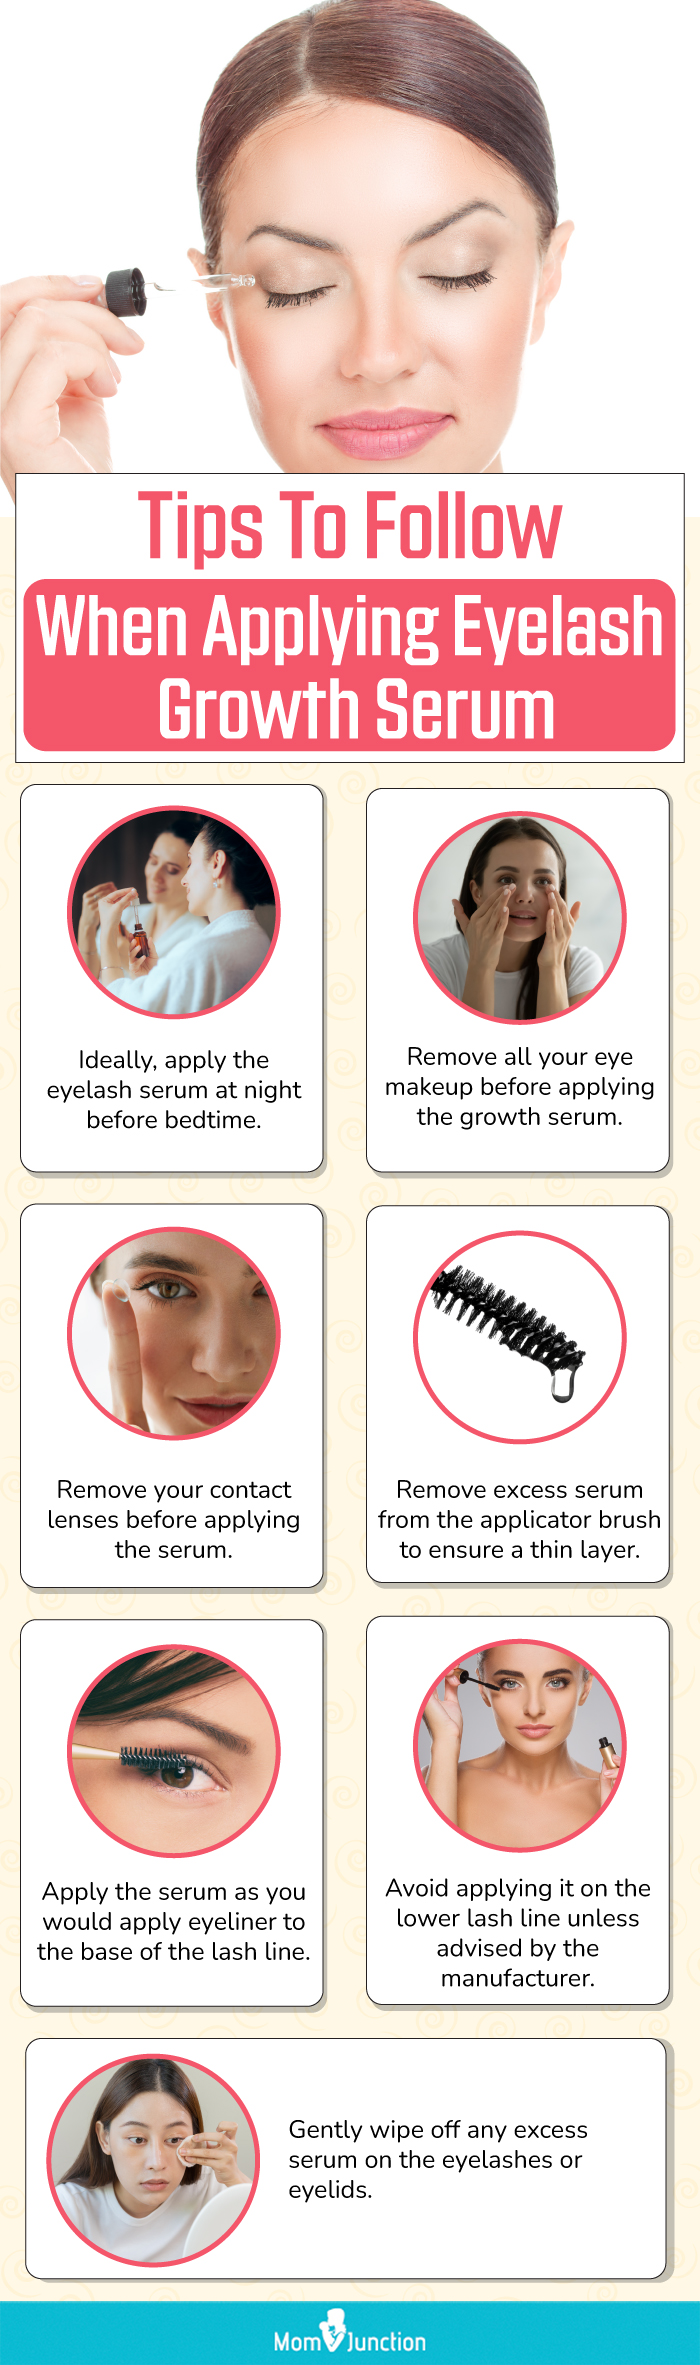 Tips To Follow When Applying Eyelash Growth Serum (infographic)